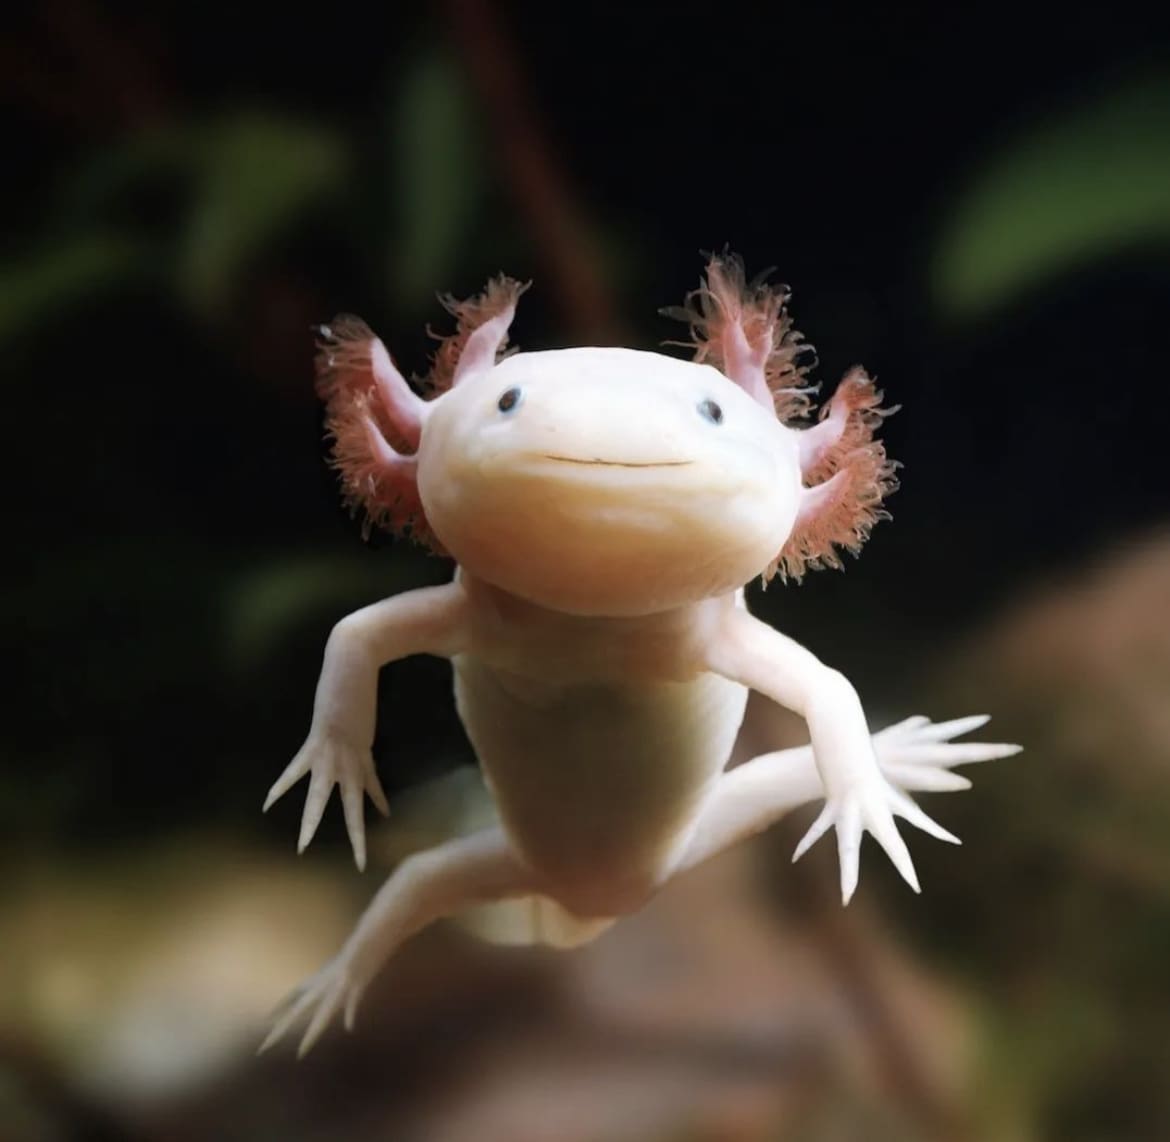 Axolotl: The Eternal Youth